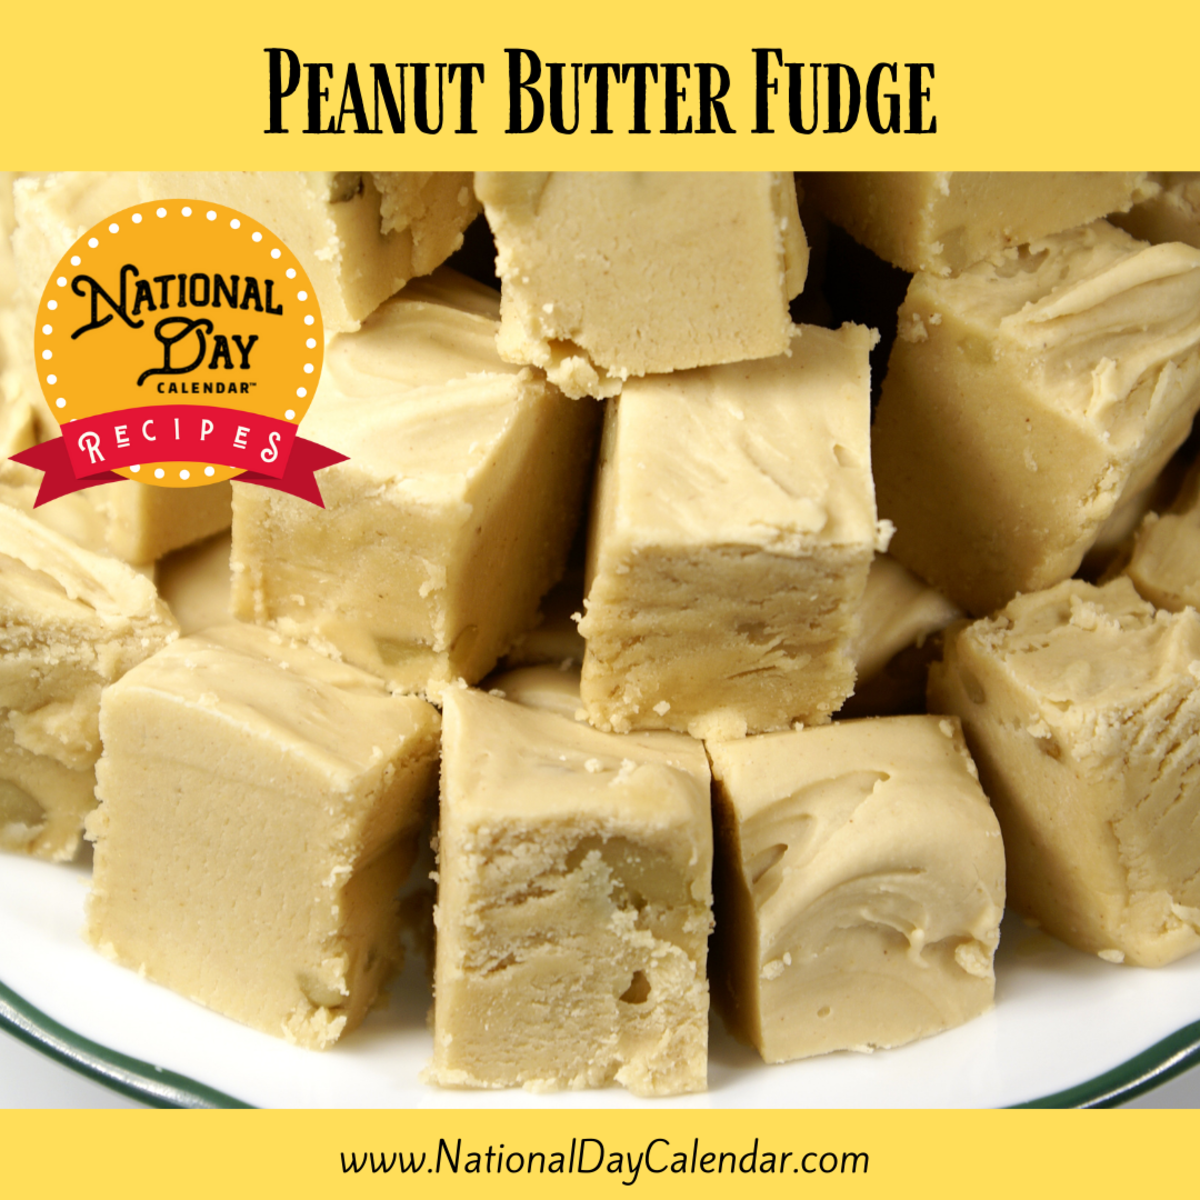 Peanut Butter Fudge recipe